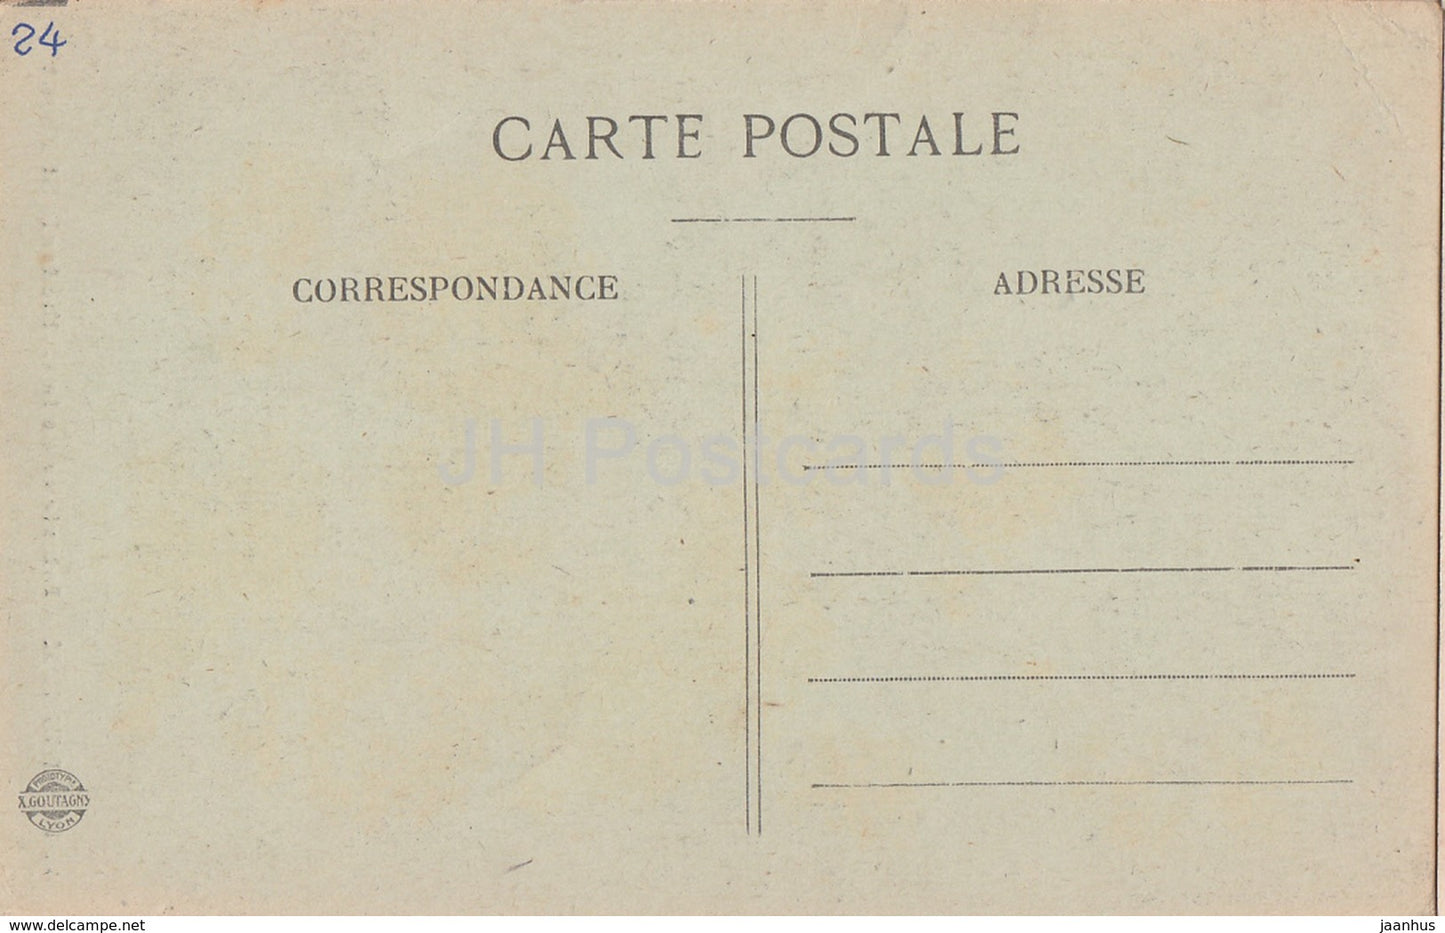 Perigueux - Interieur de la Cathedrale St Front - cathedral - 14 - old postcard - France - unused